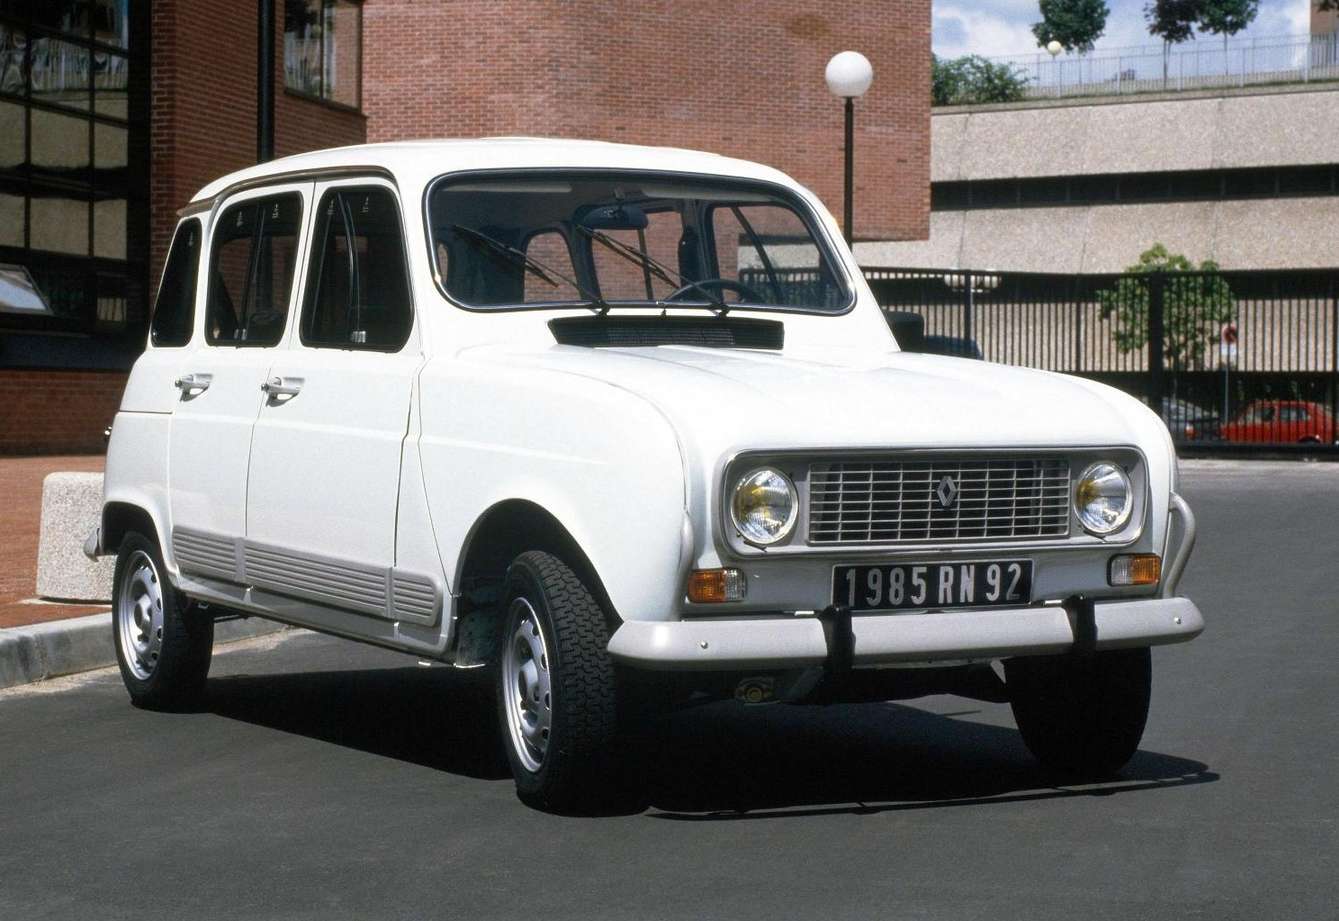 Renault_4